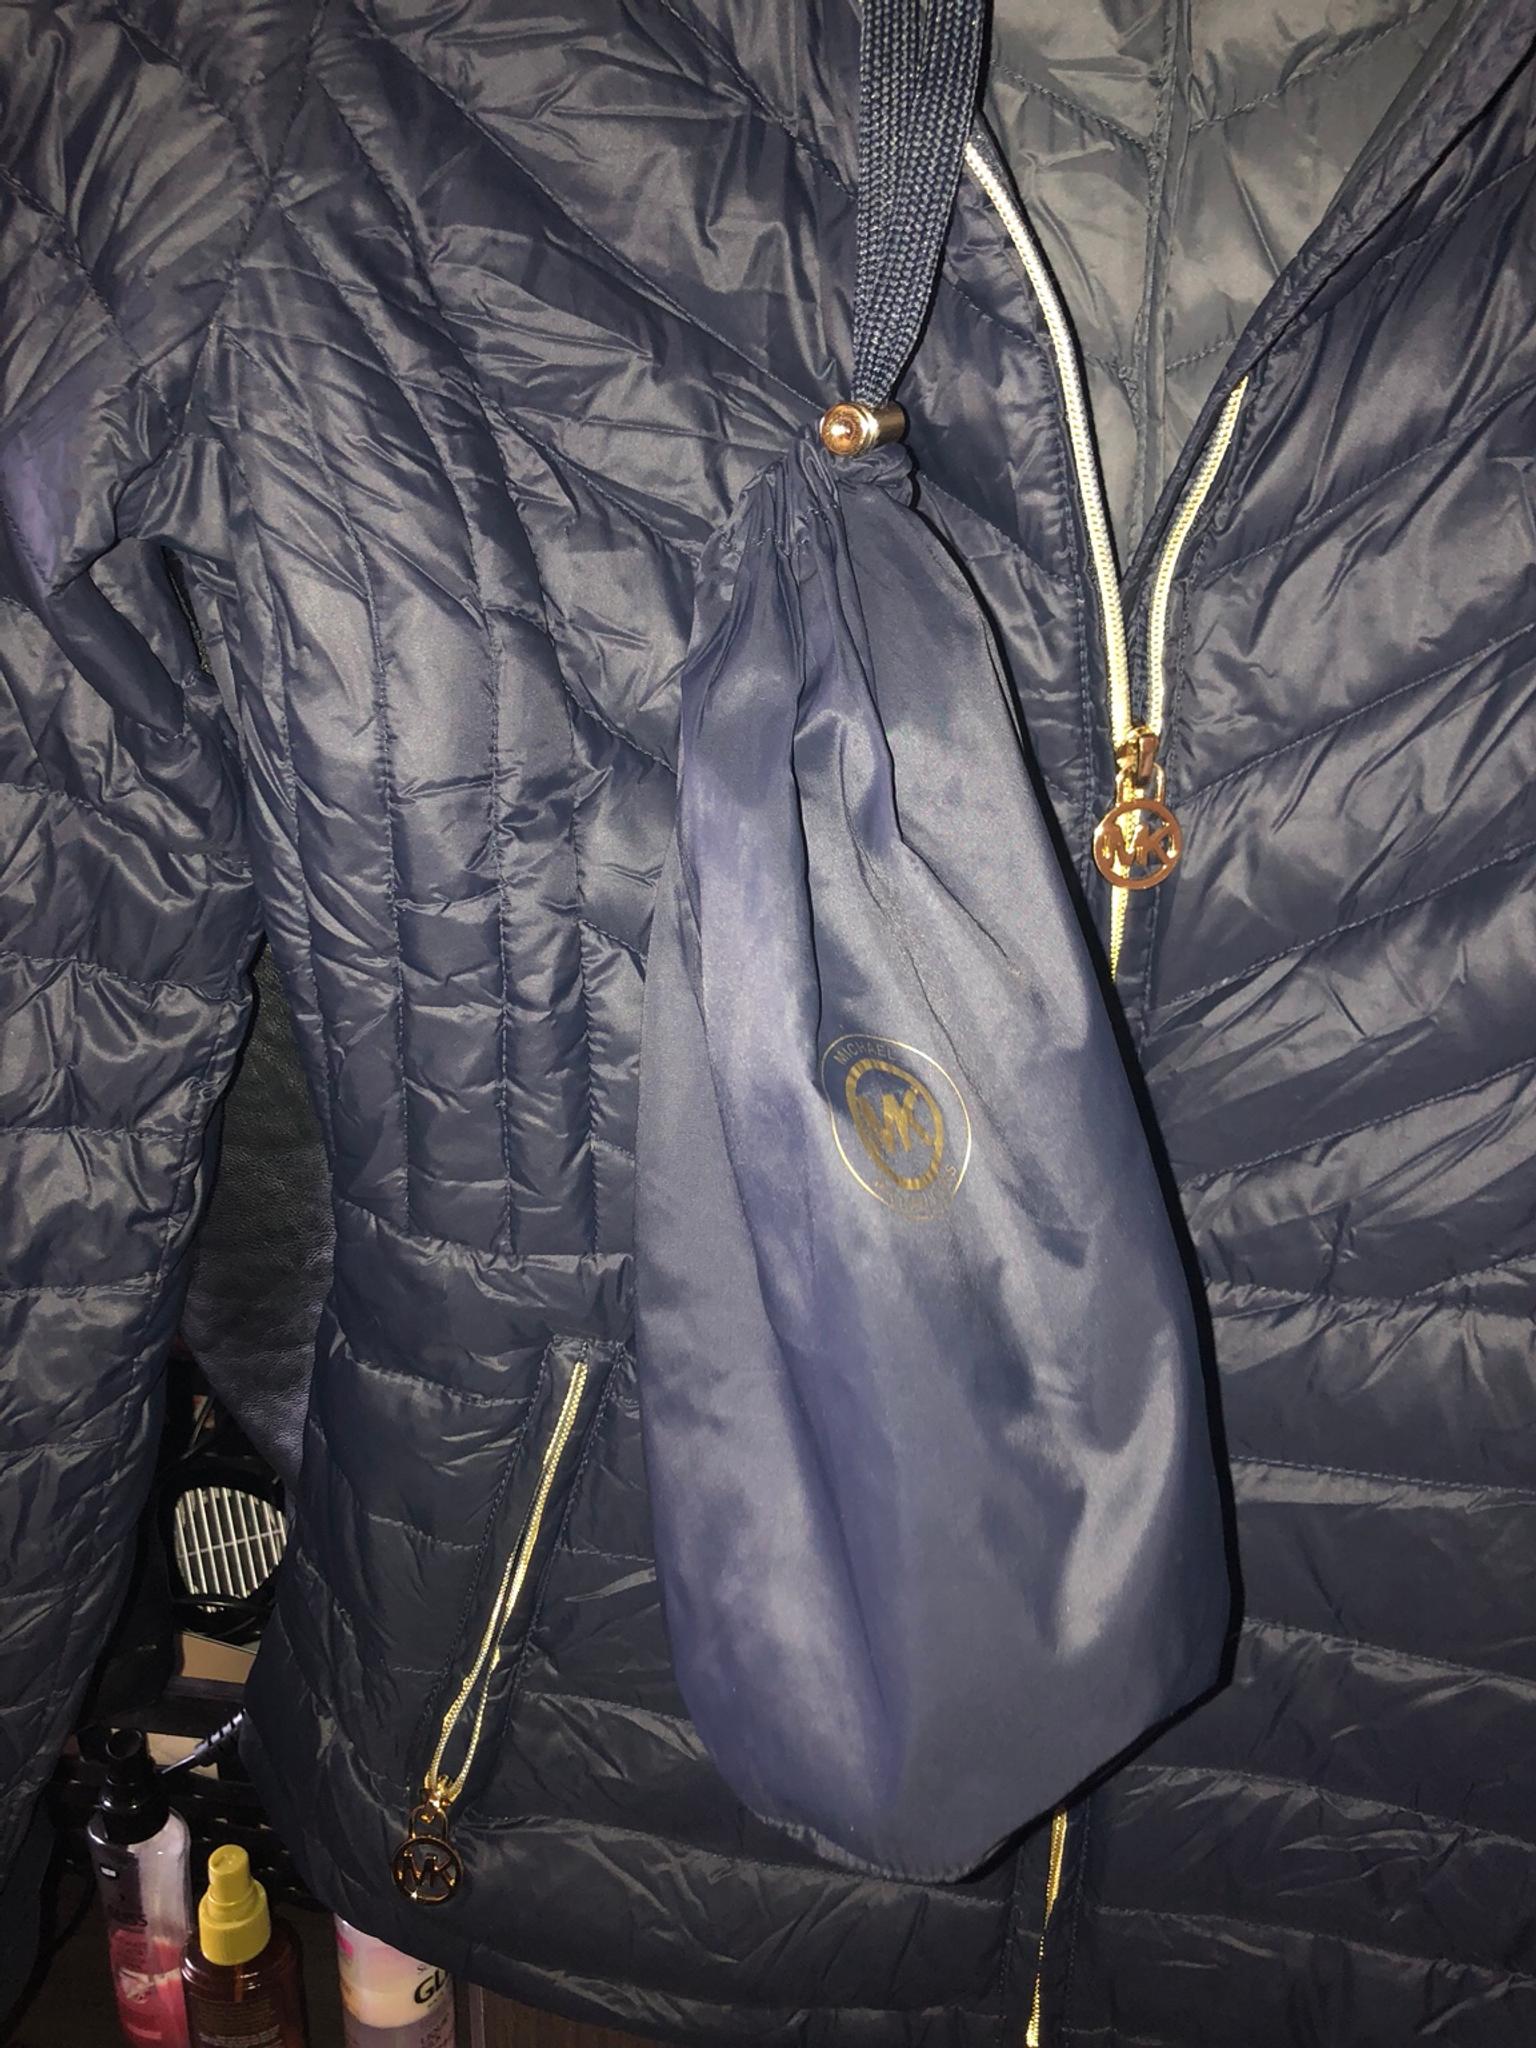 michael kors packable down jacket tk maxx